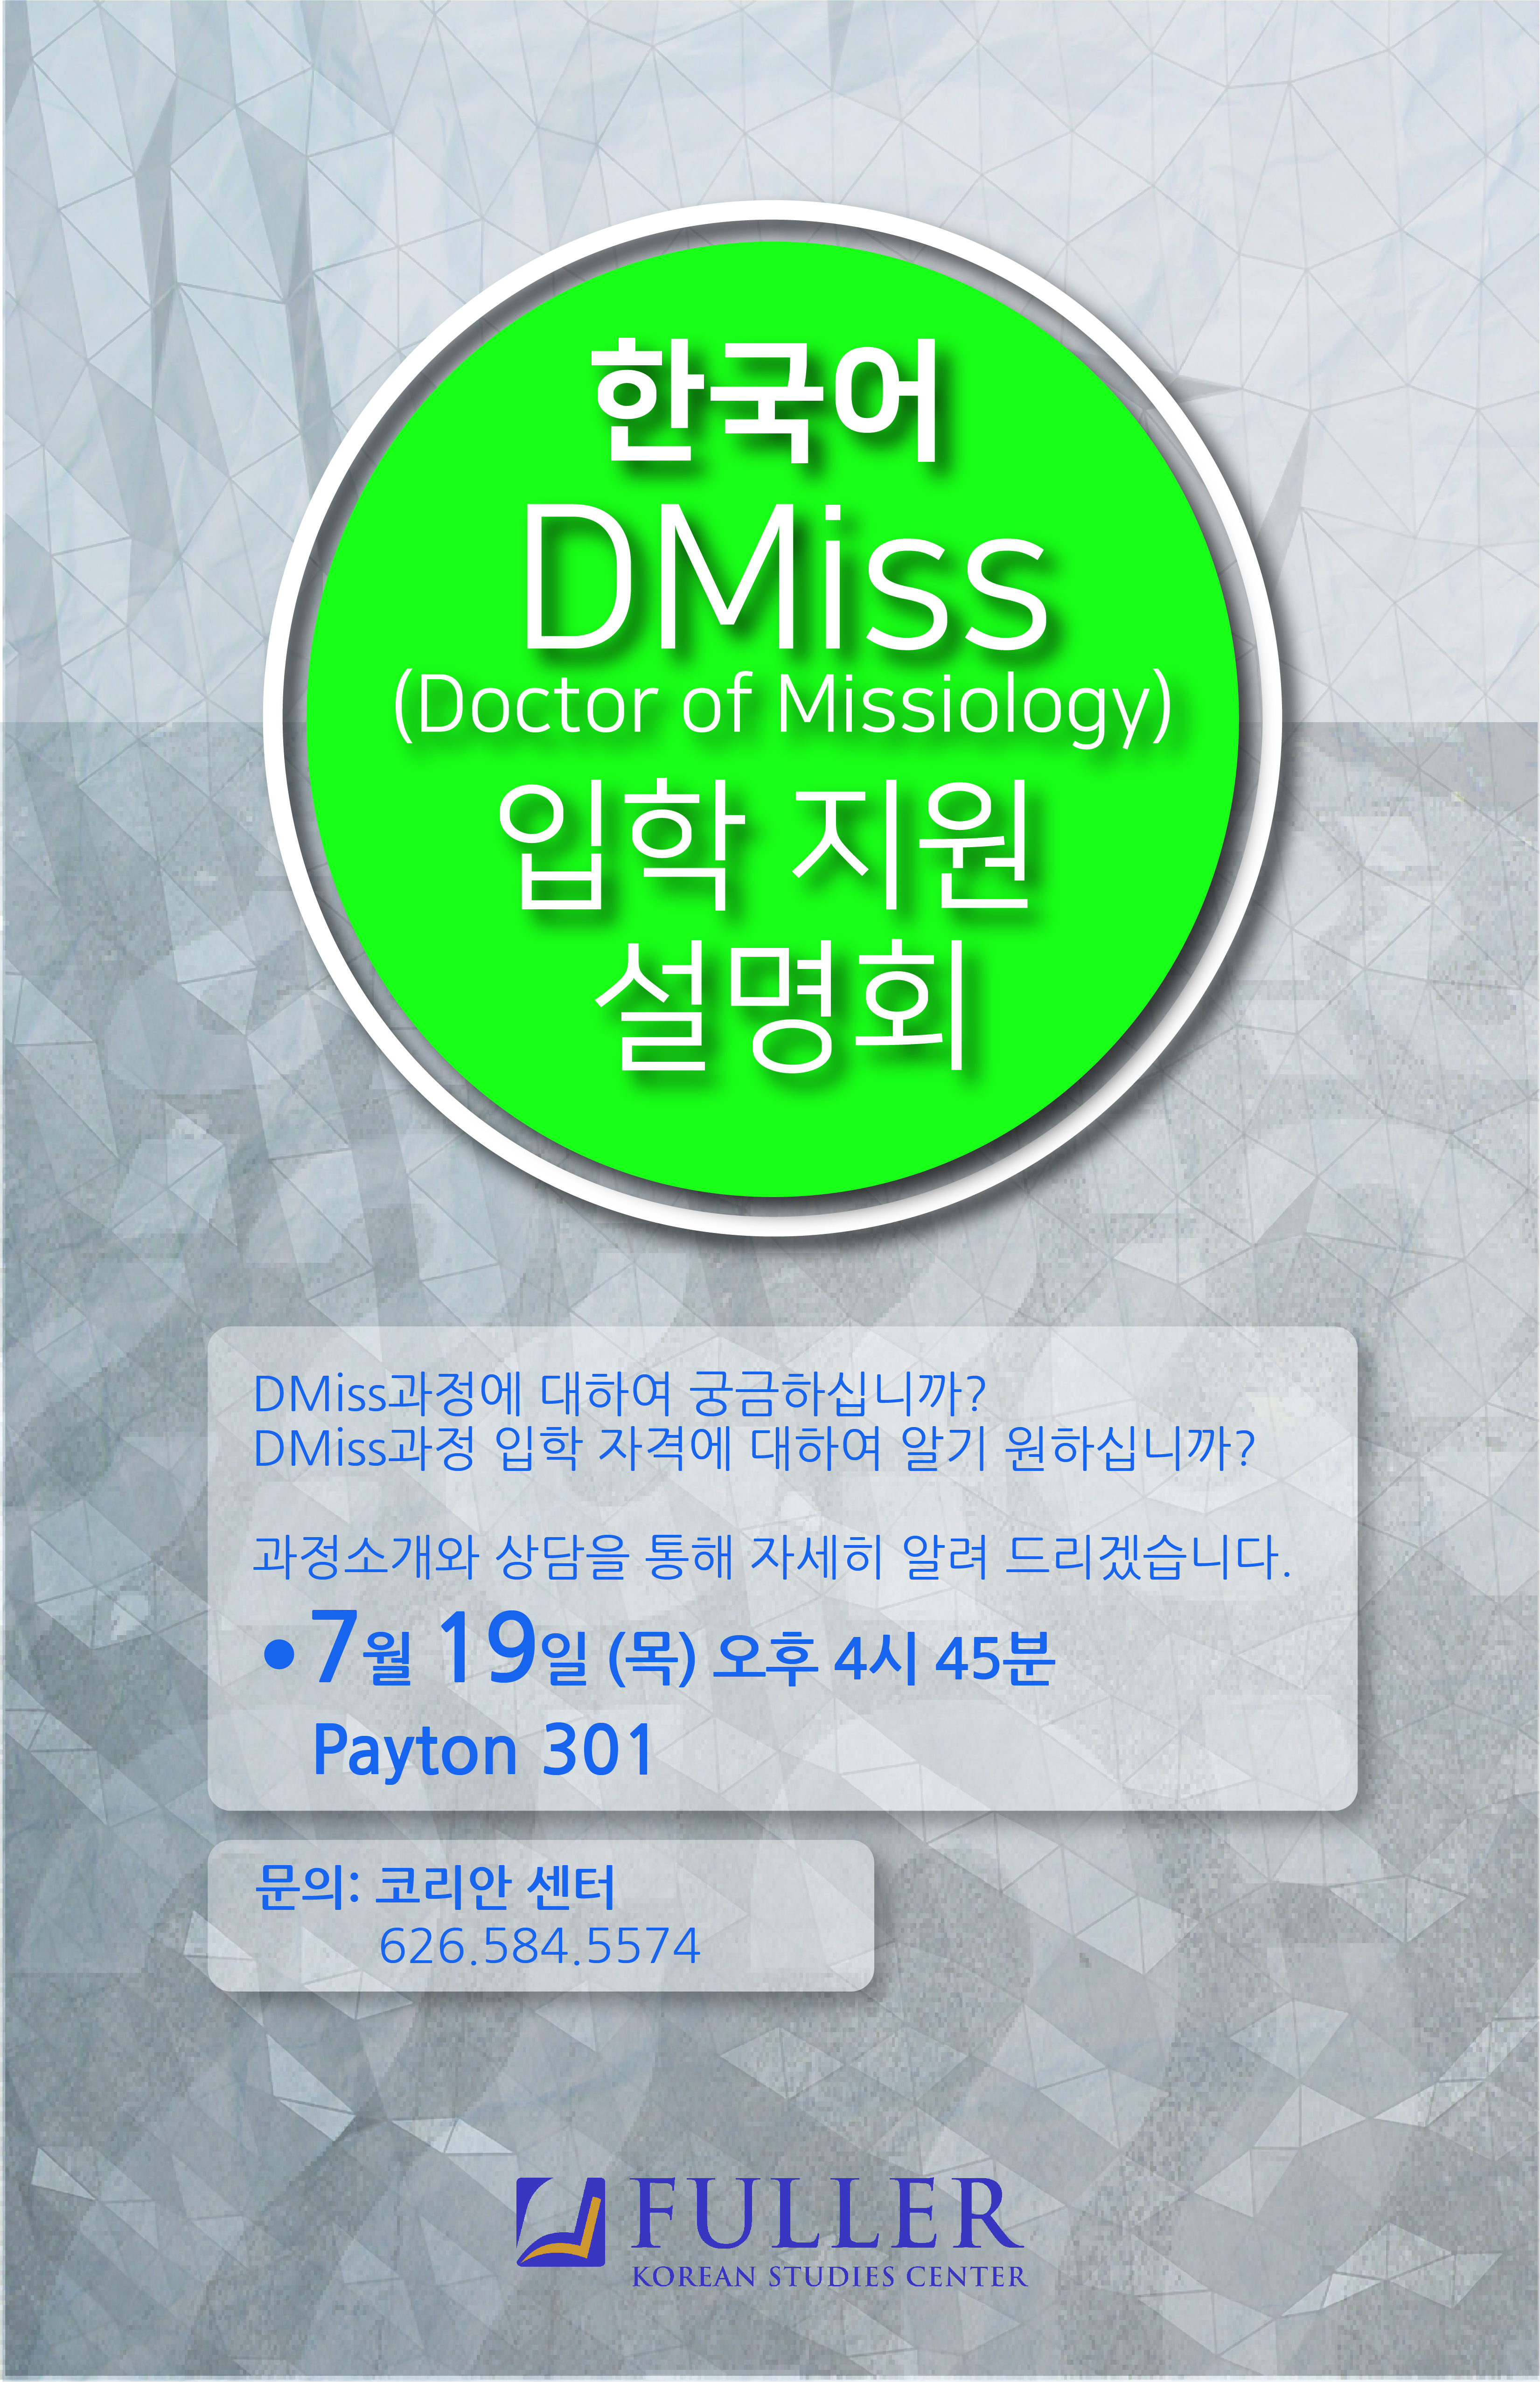 DMiss Info Meeting2018 (1).jpg